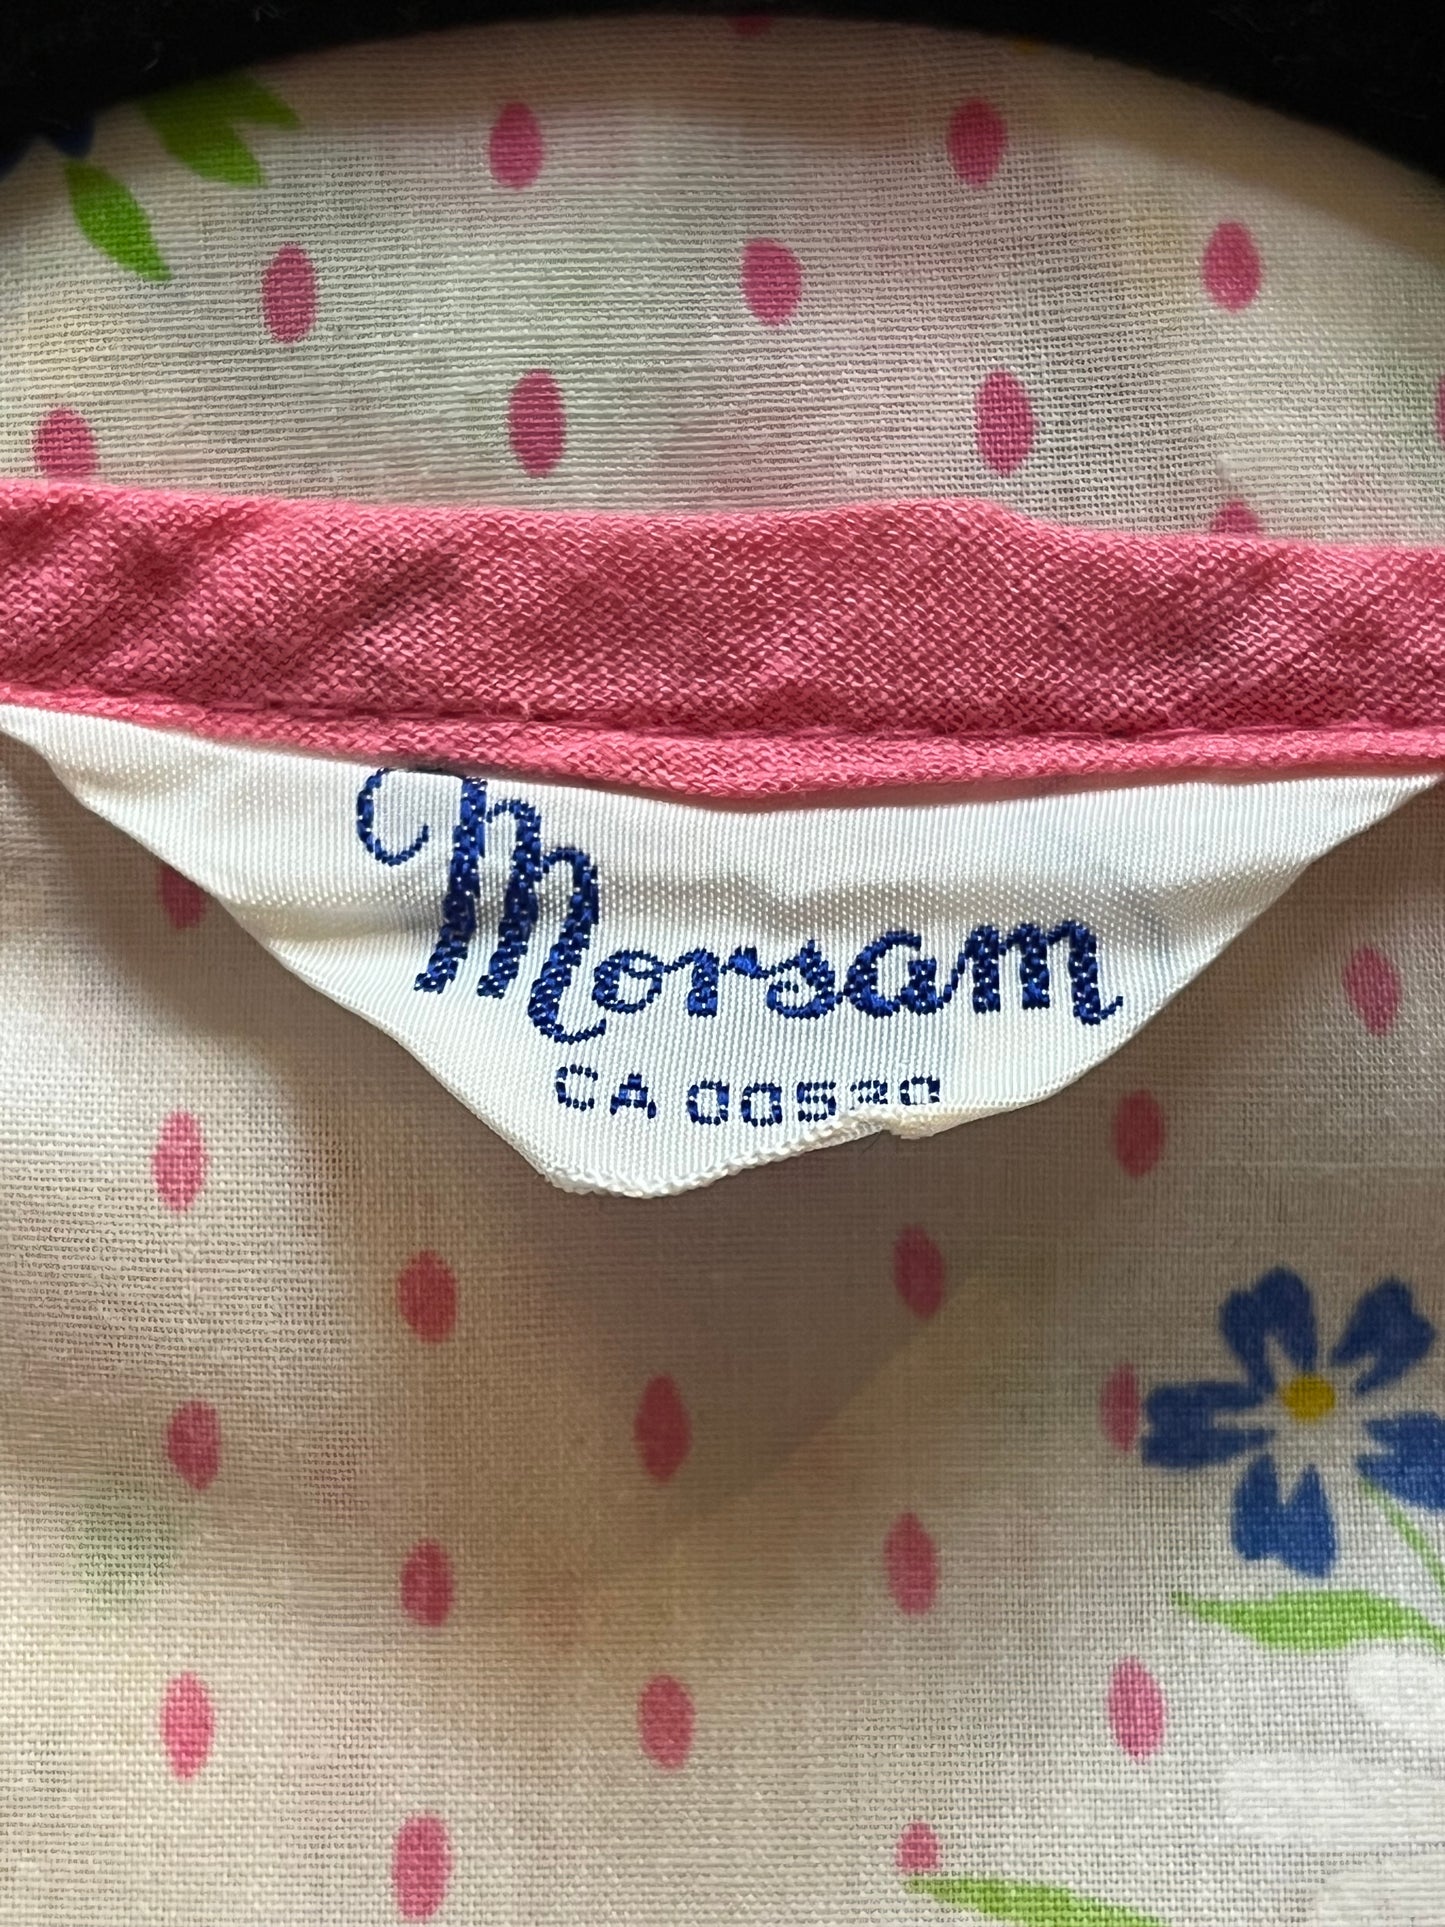 70s 'Morsam' Floral Wrap Dress / Small